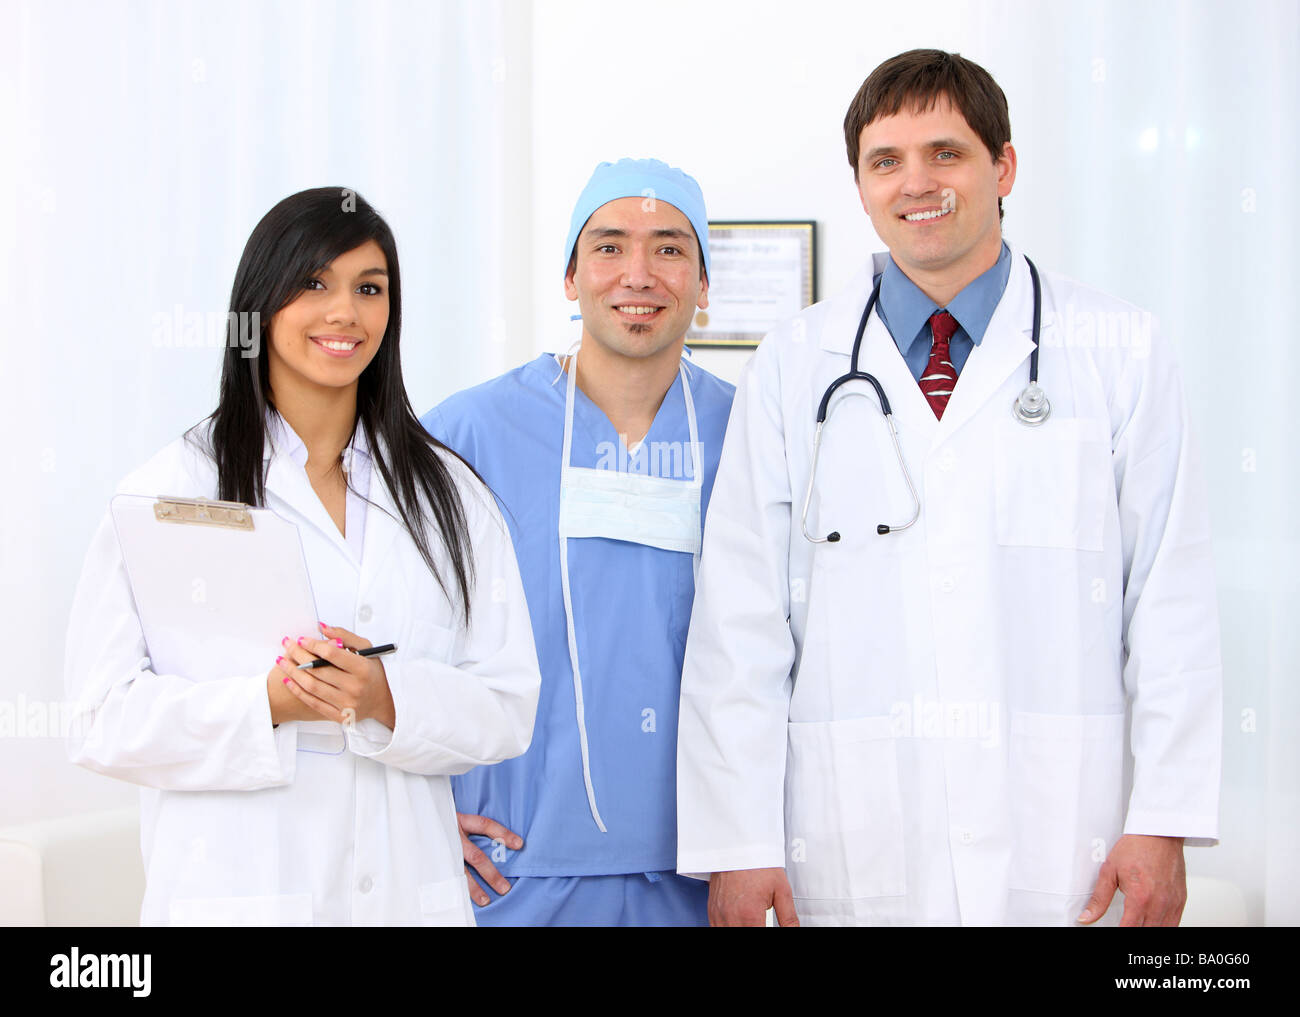 Medical personnel group portrait Stock Photo